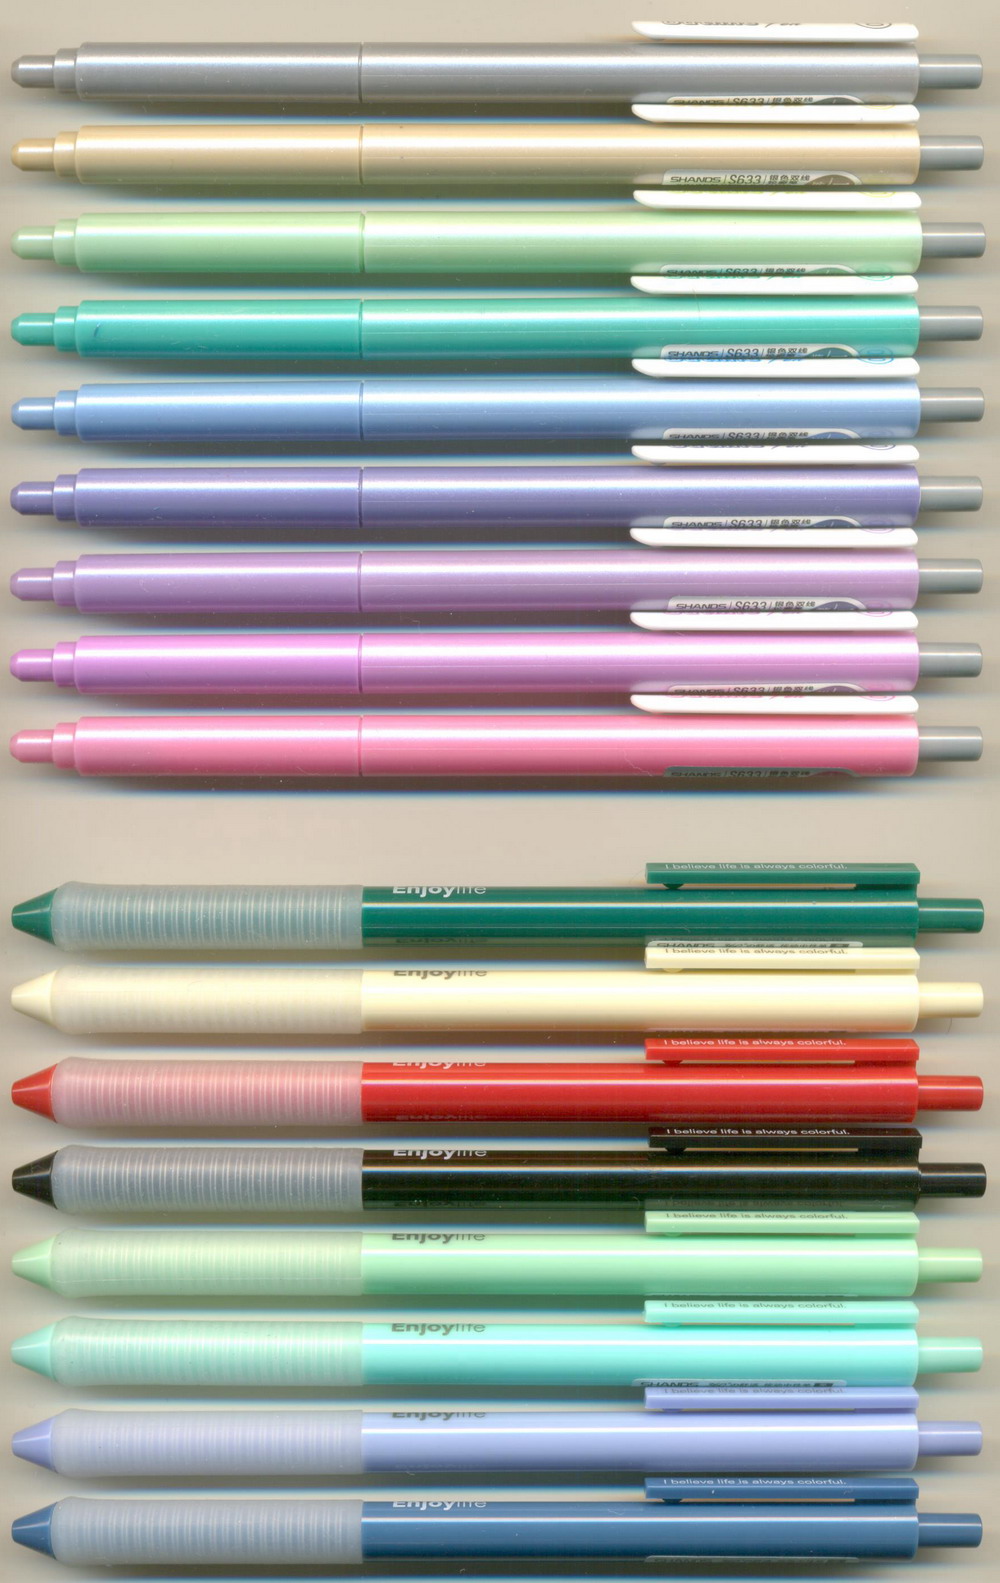 SHANDS OUTLINE Pen S633 1.0 Silver / Enjoylife S643 0.5